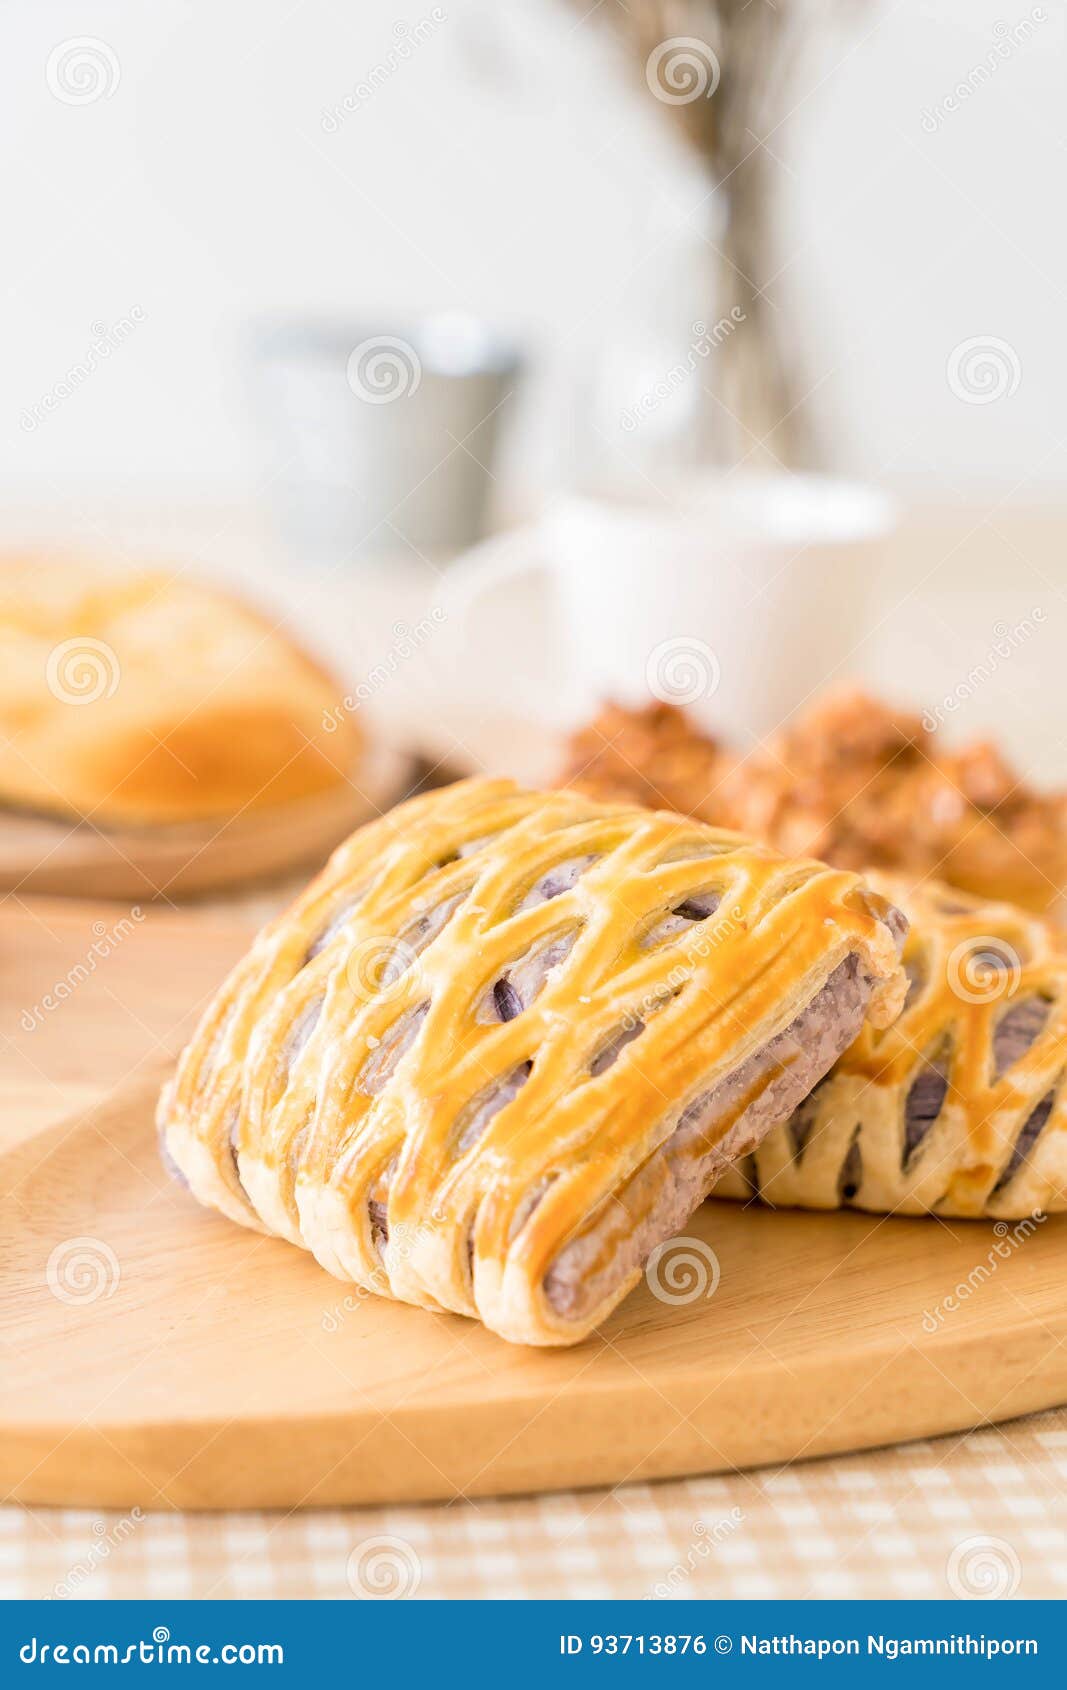 Taro pies on table stock photo. Image of nutritious, bakery - 93713876